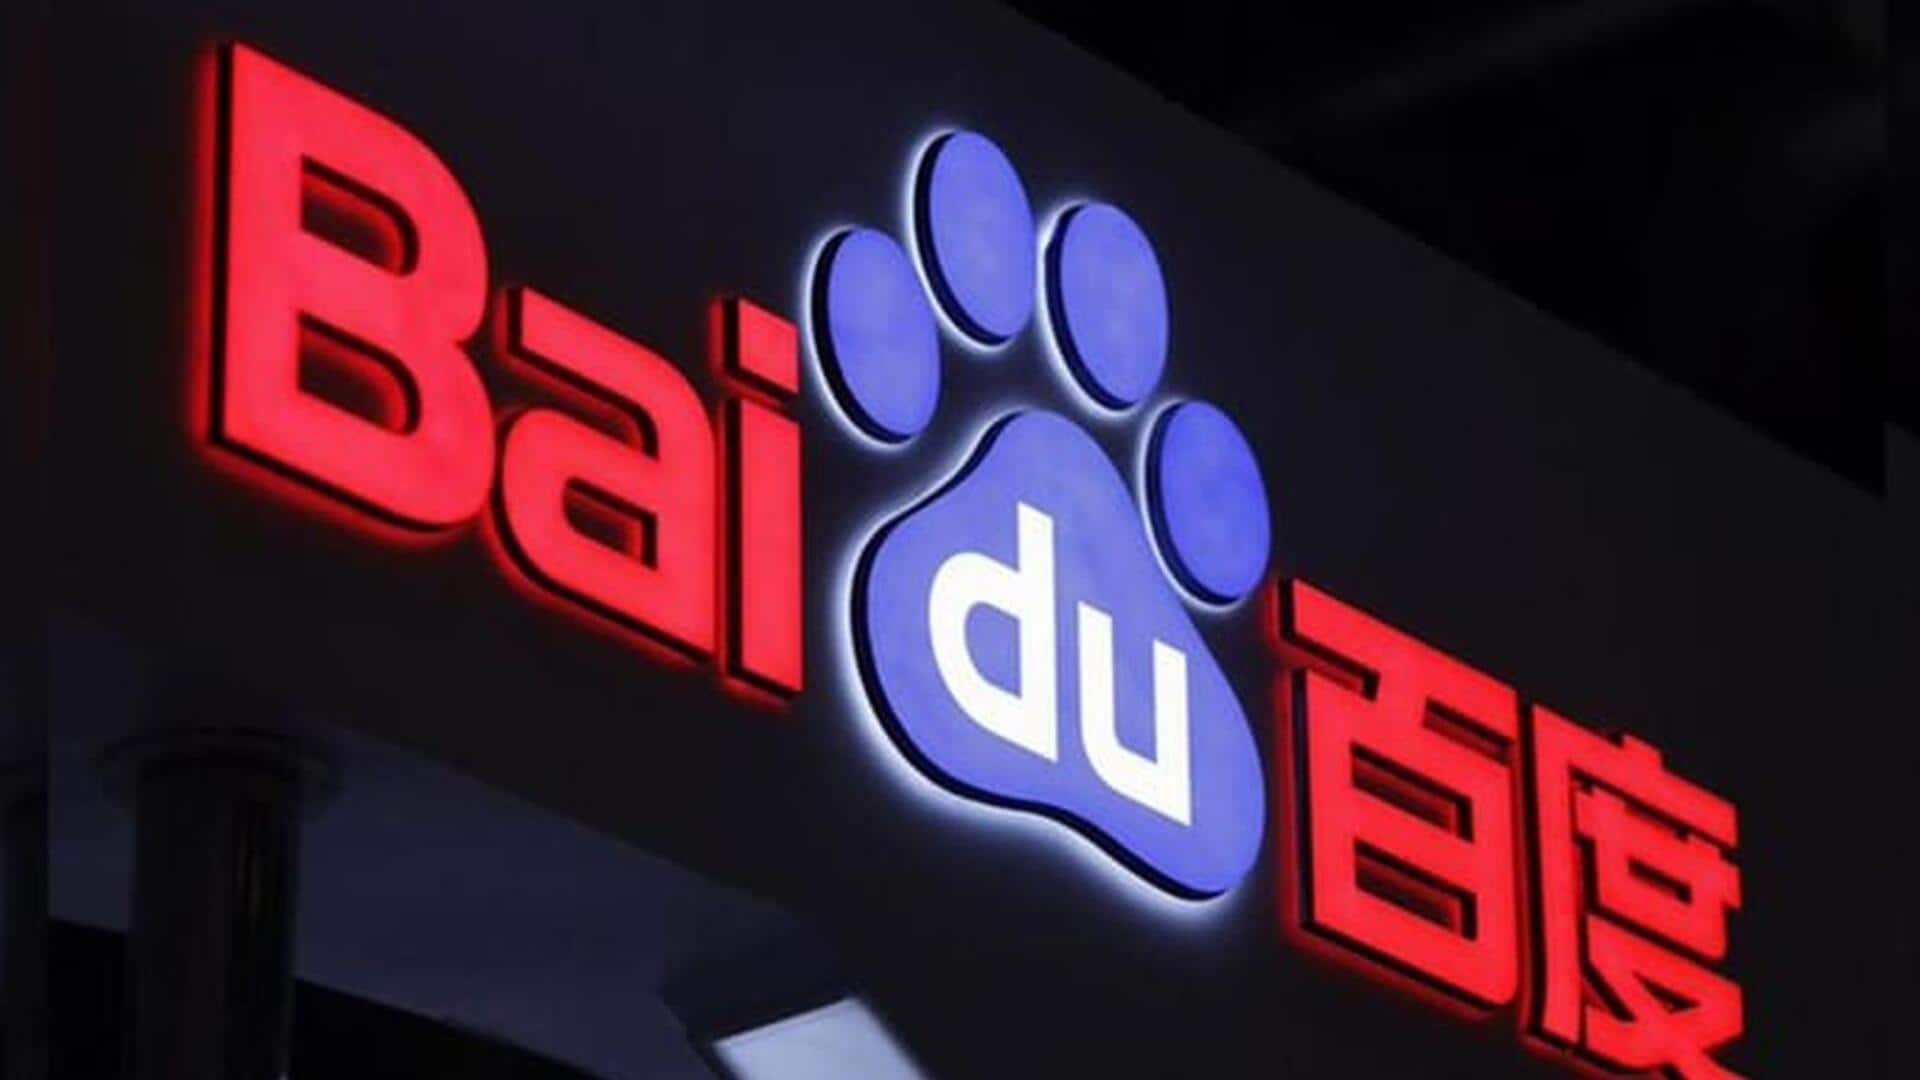 बायडू ने एर्नी बॉट की नकली ऐप को लेकर ऐपल के खिलाफ दायर किया मुकदमा 